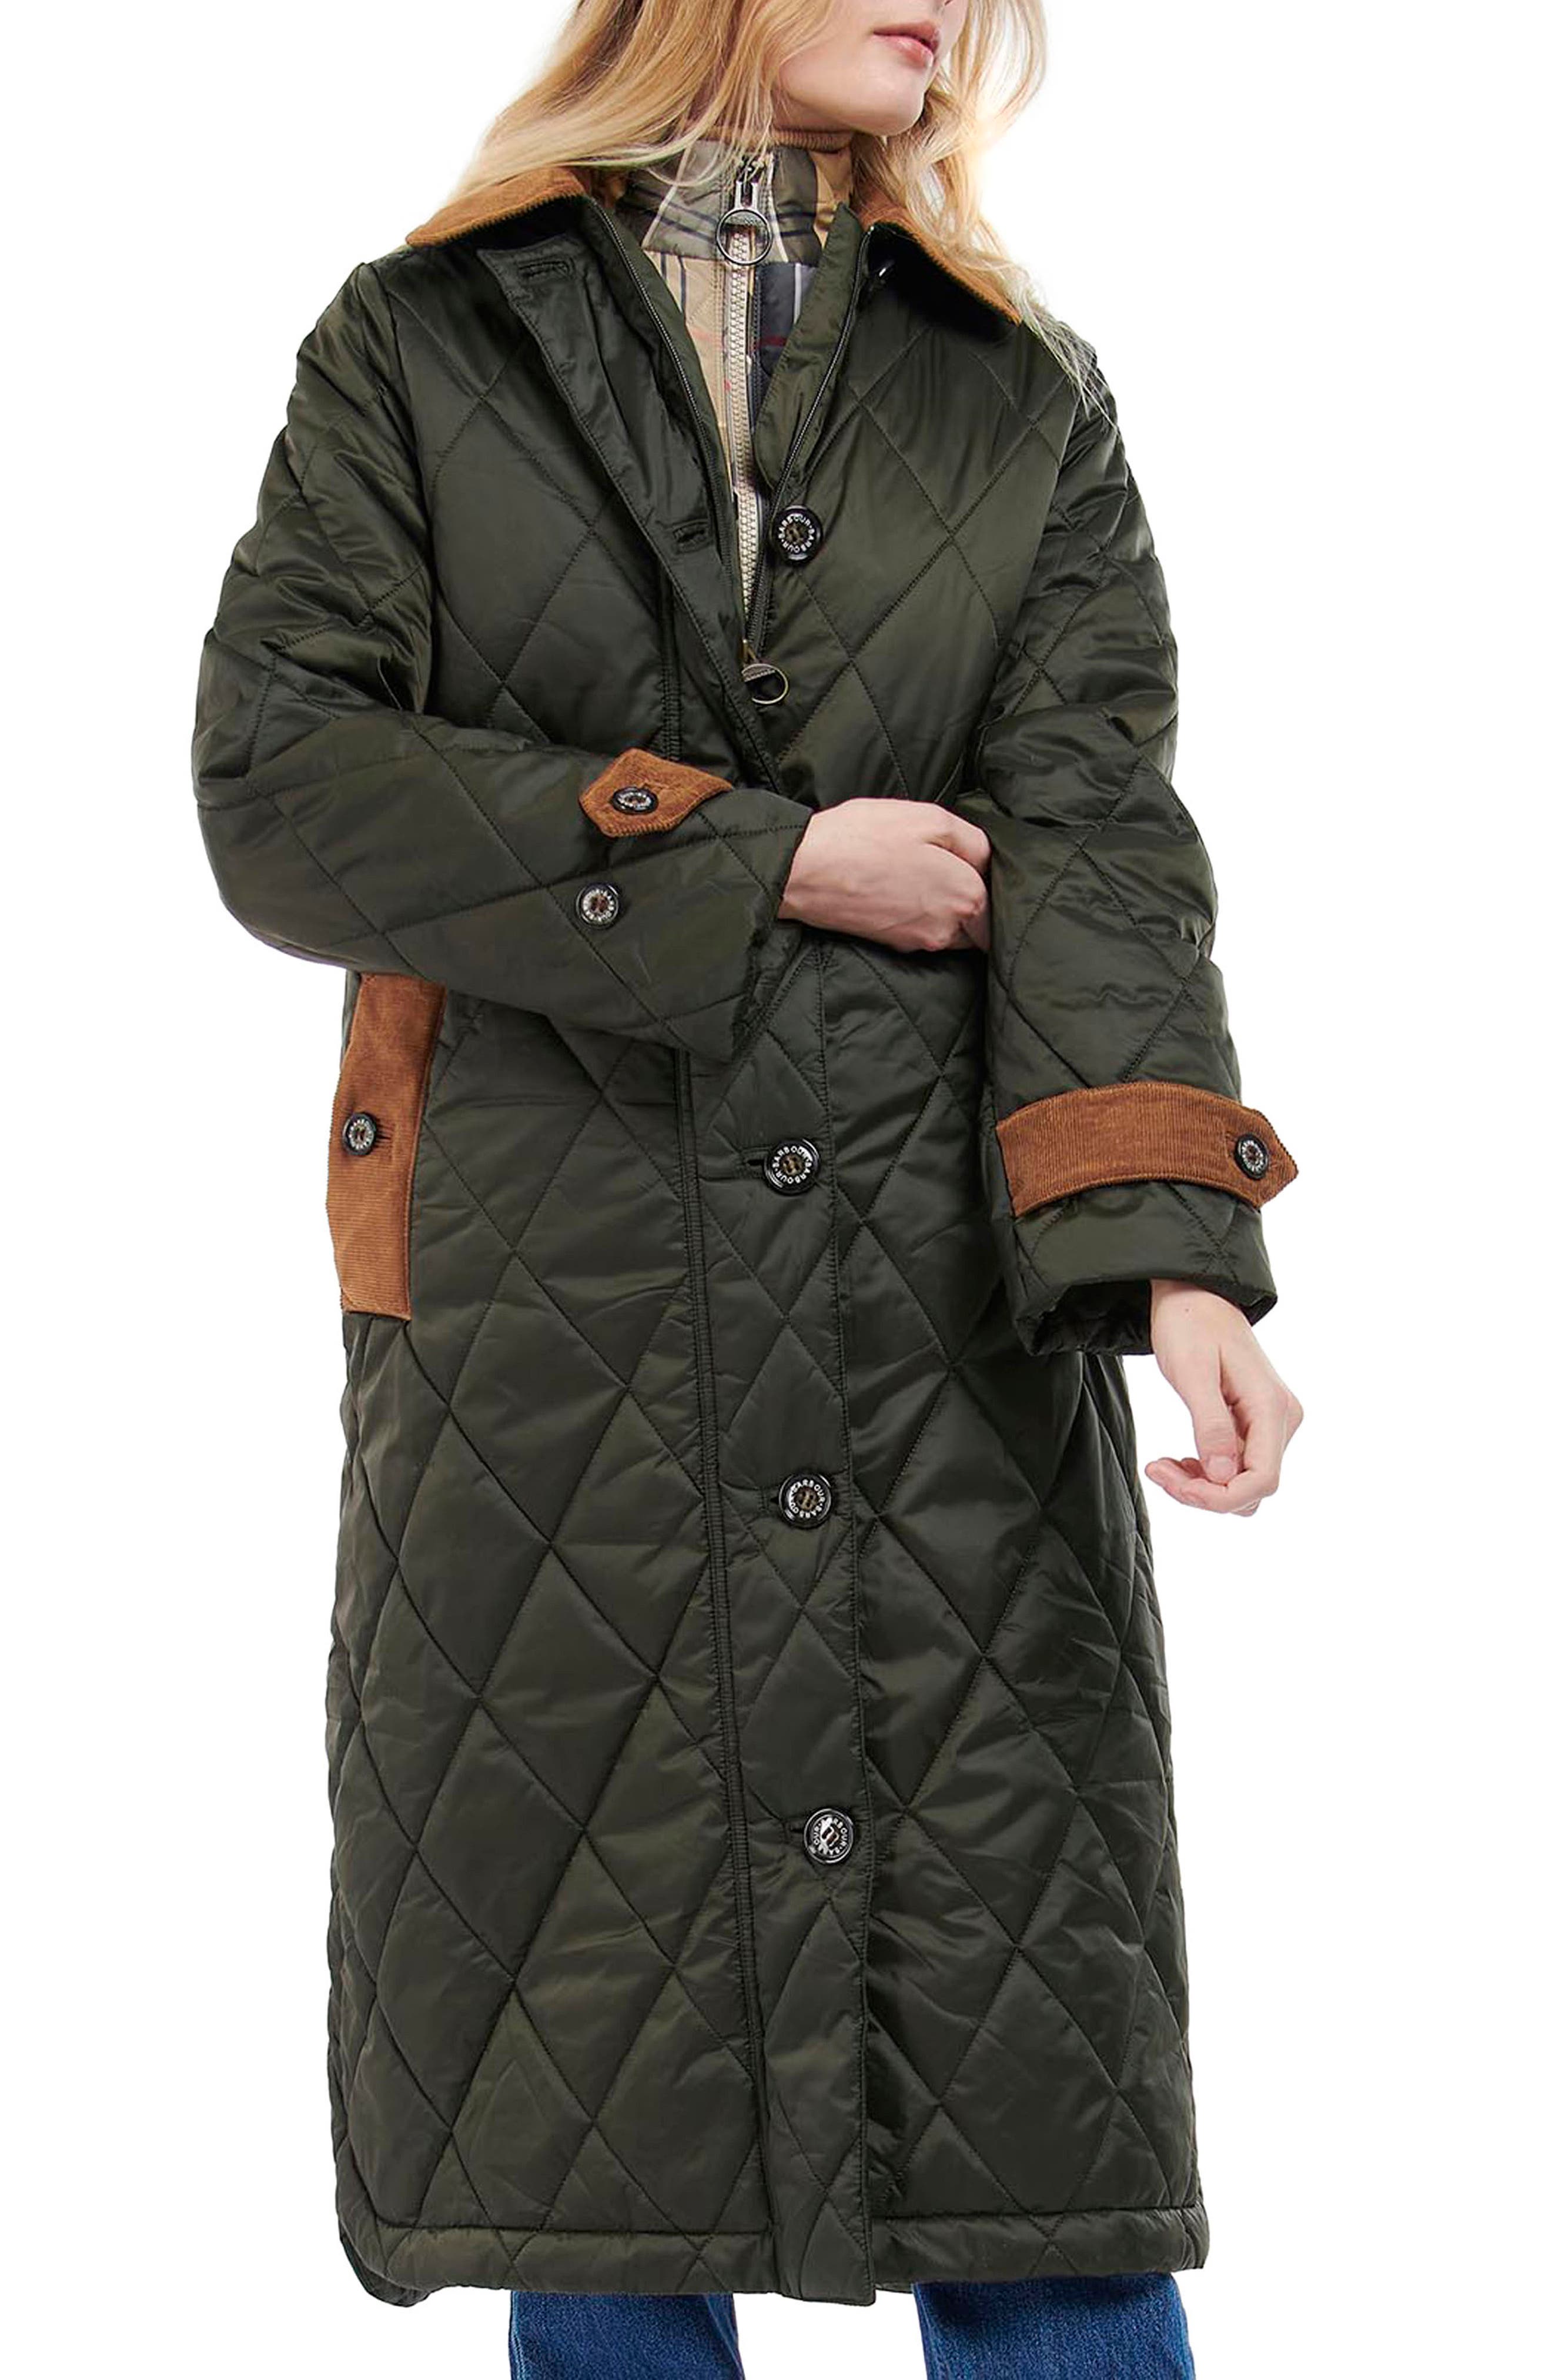 katie tokyo quilting jacket coat 22W FREE SIZE ジャケット/アウター